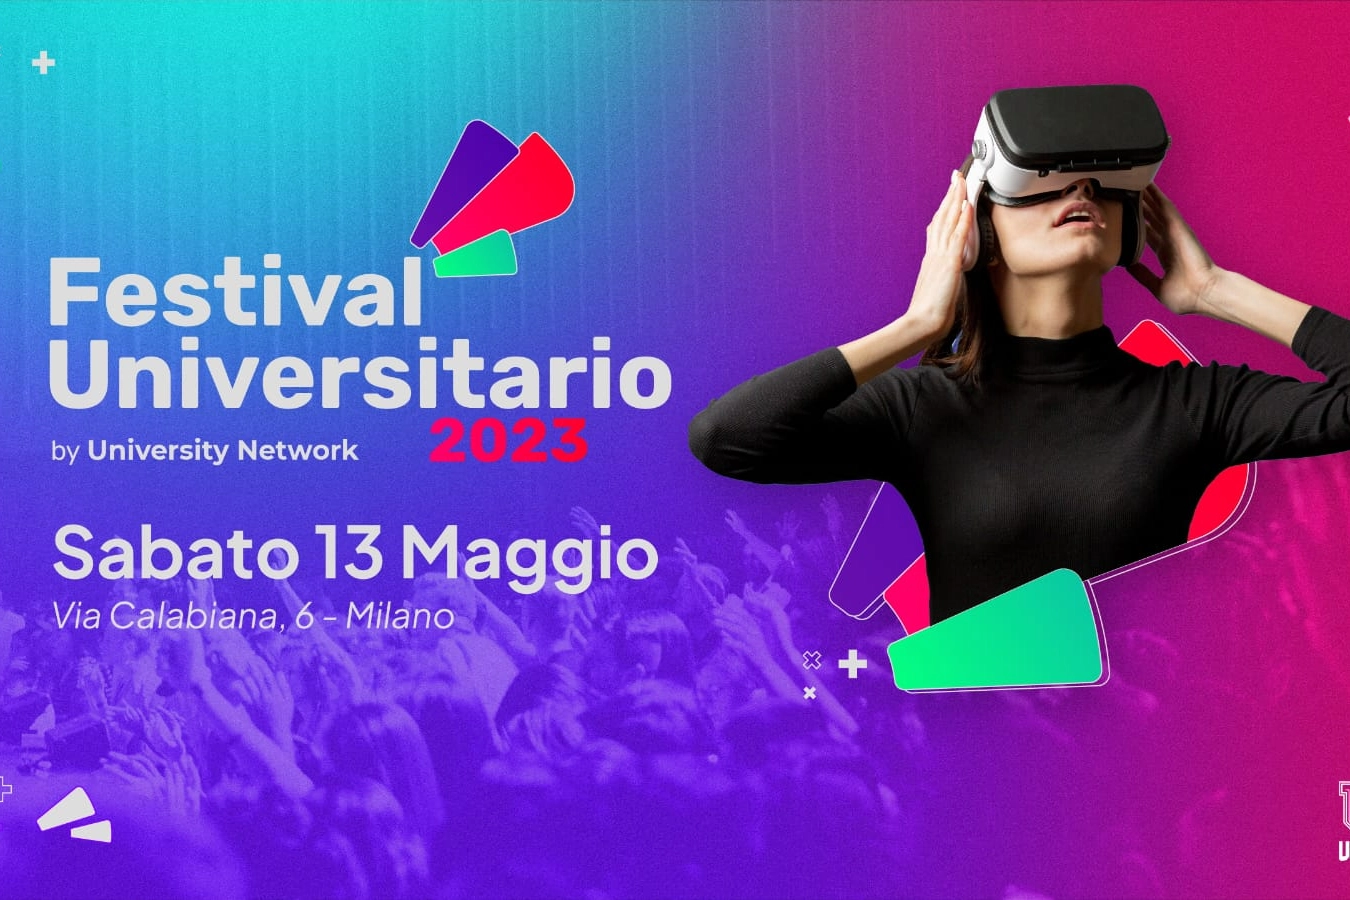 Festival Universitario 2023